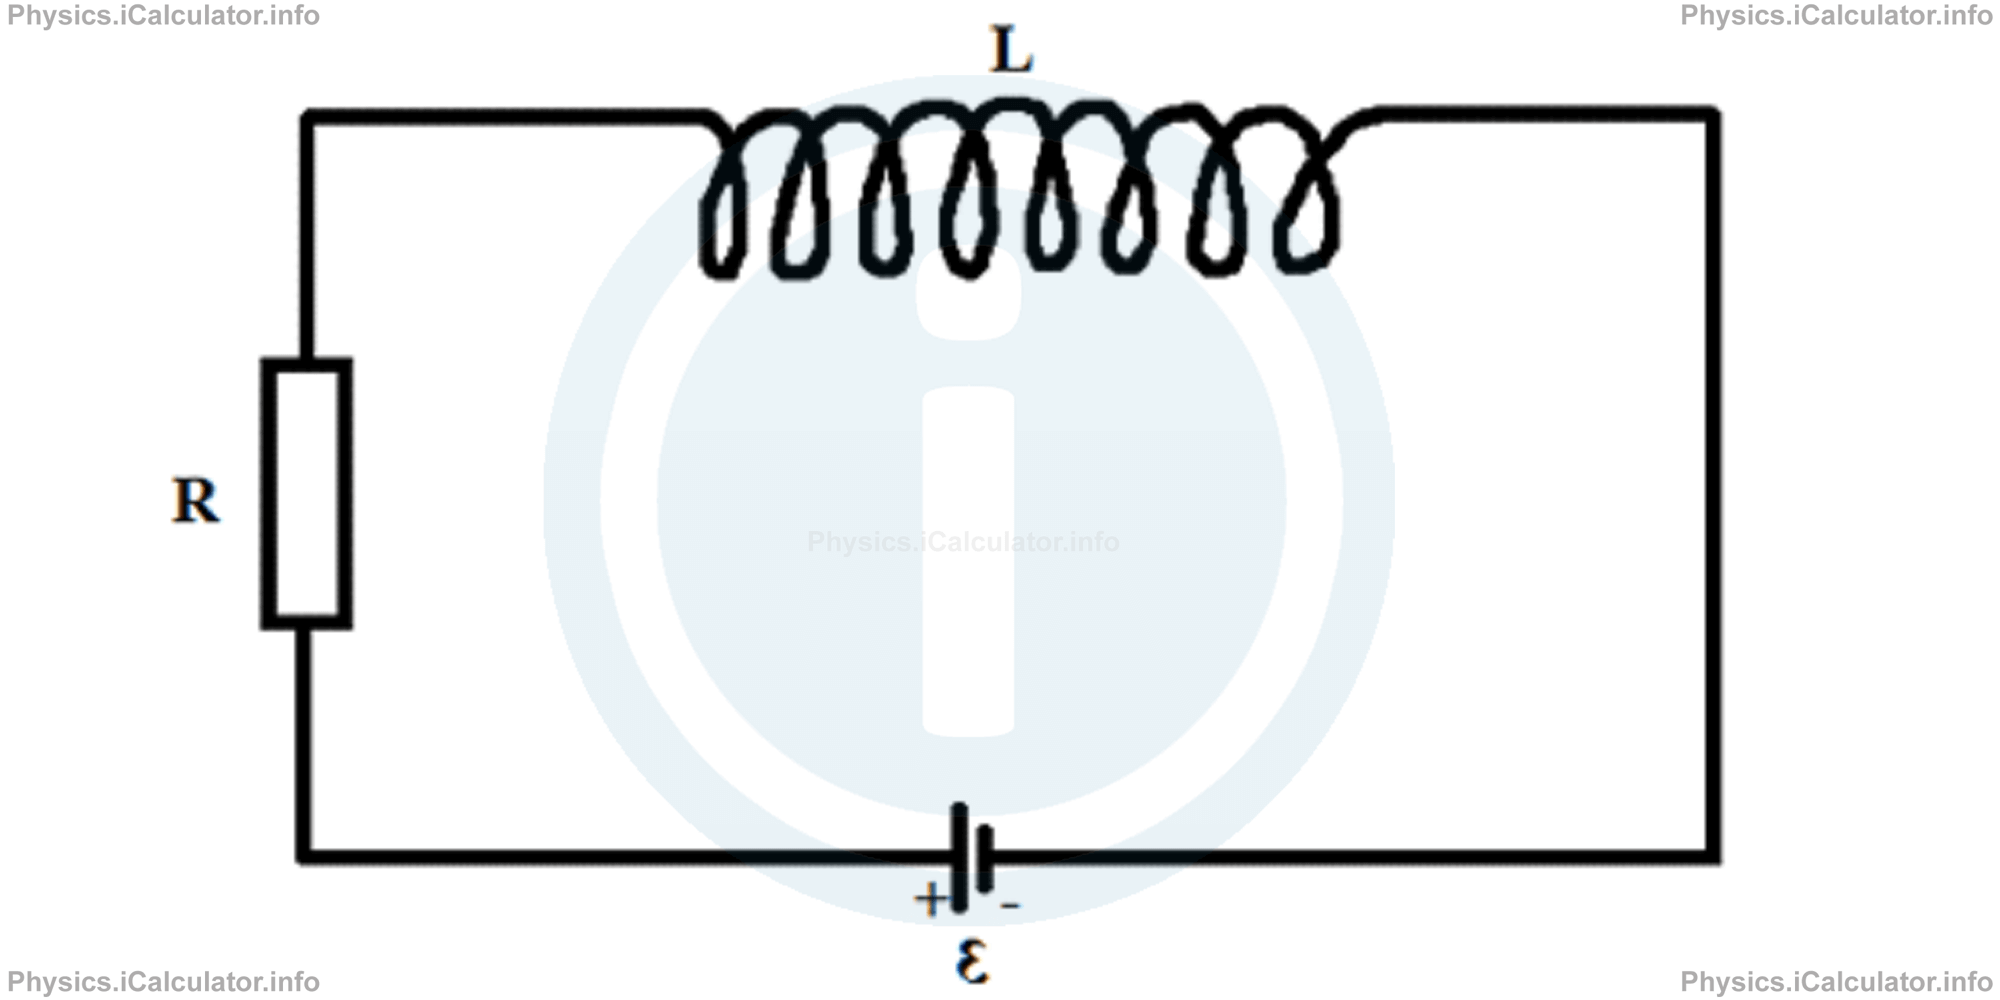 Physics Tutorials: This image provides visual information for the physics tutorial RL Circuits 